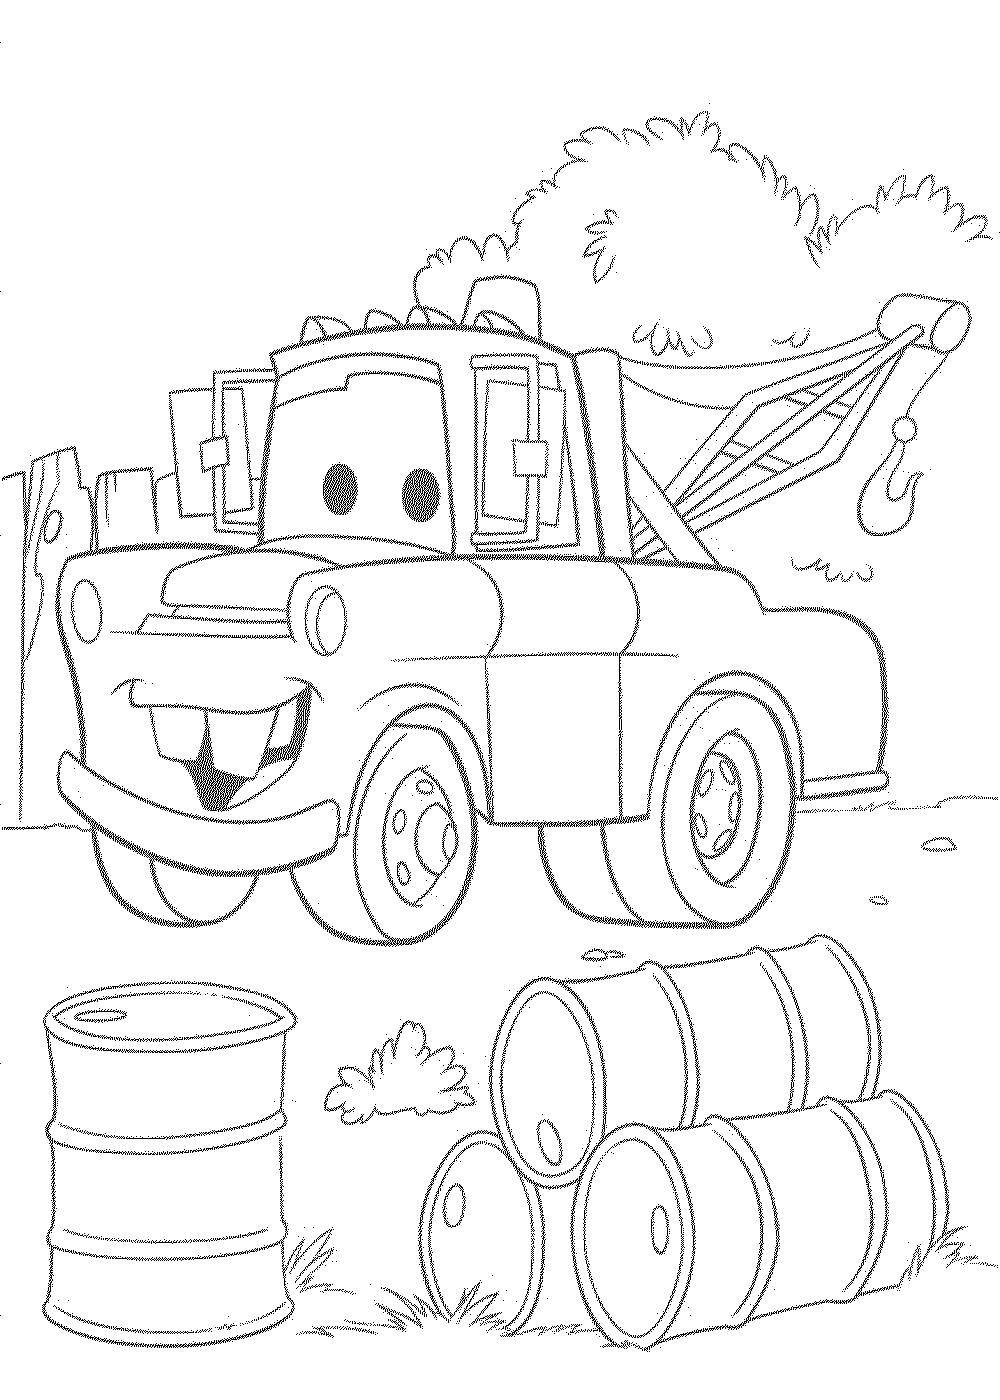 Coloring Mater. Category Wheelbarrows. Tags:  Sir, wheelbarrows, barrels.